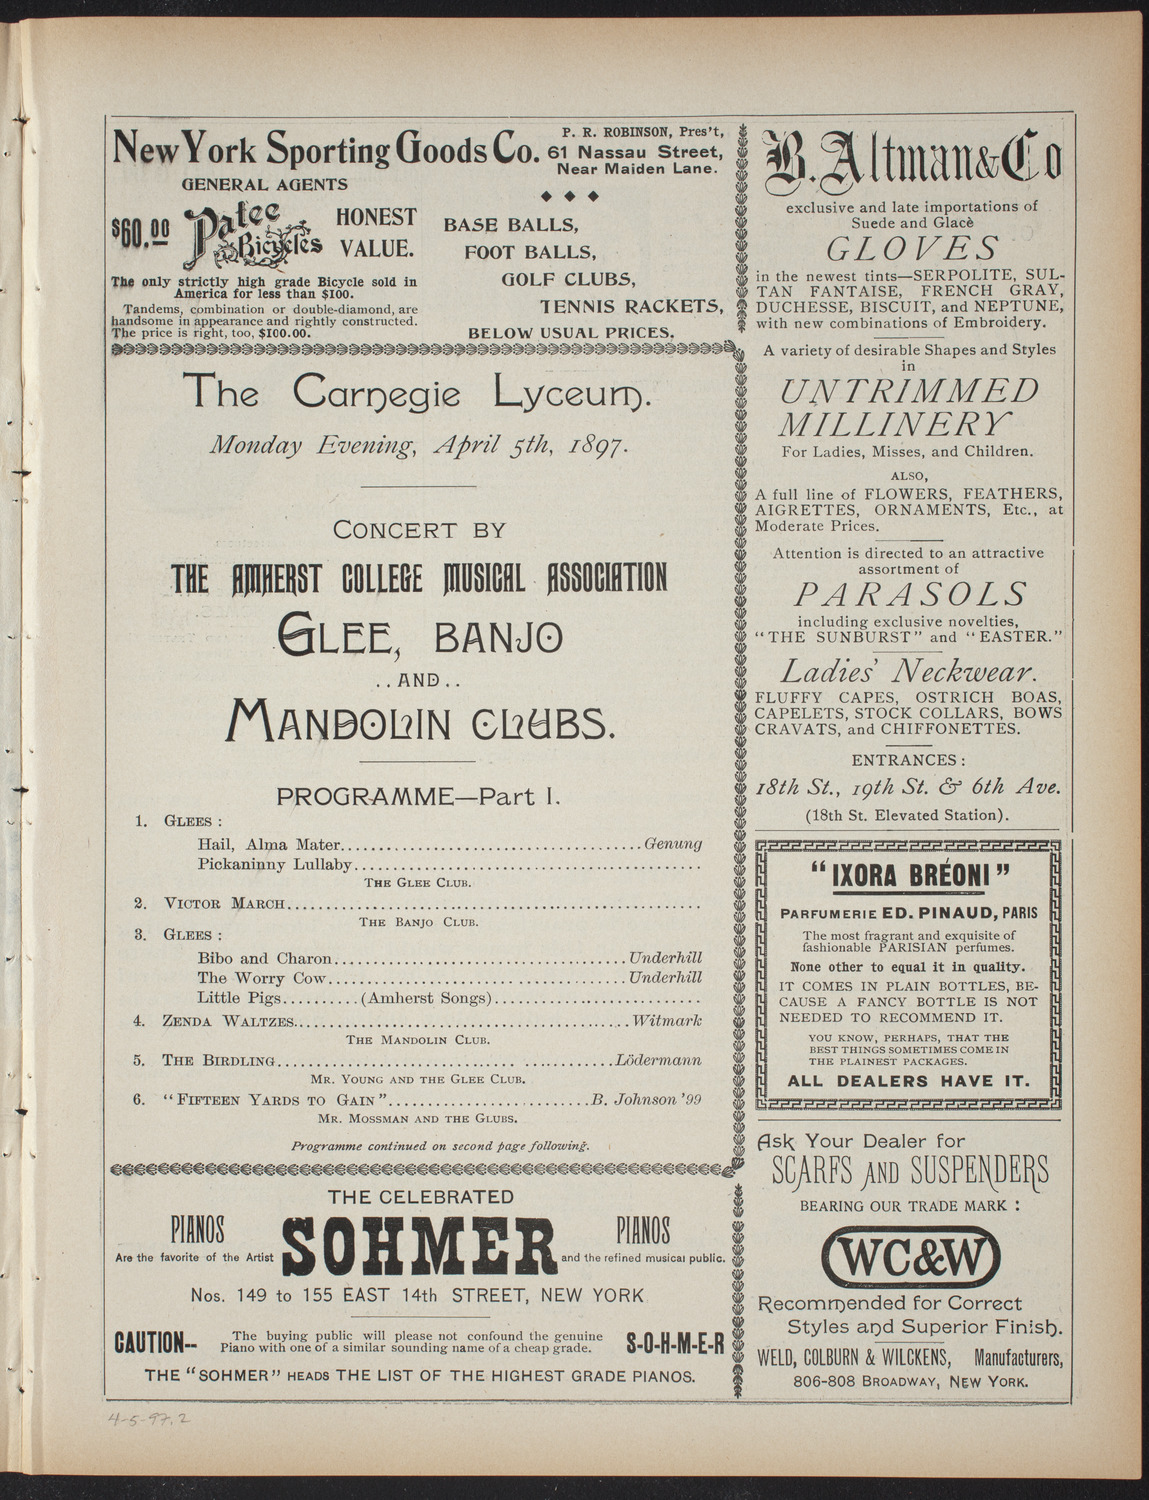 Amherst College Musical Association: Glee, Banjo, and Mandolin Clubs, April 5, 1897, program page 3